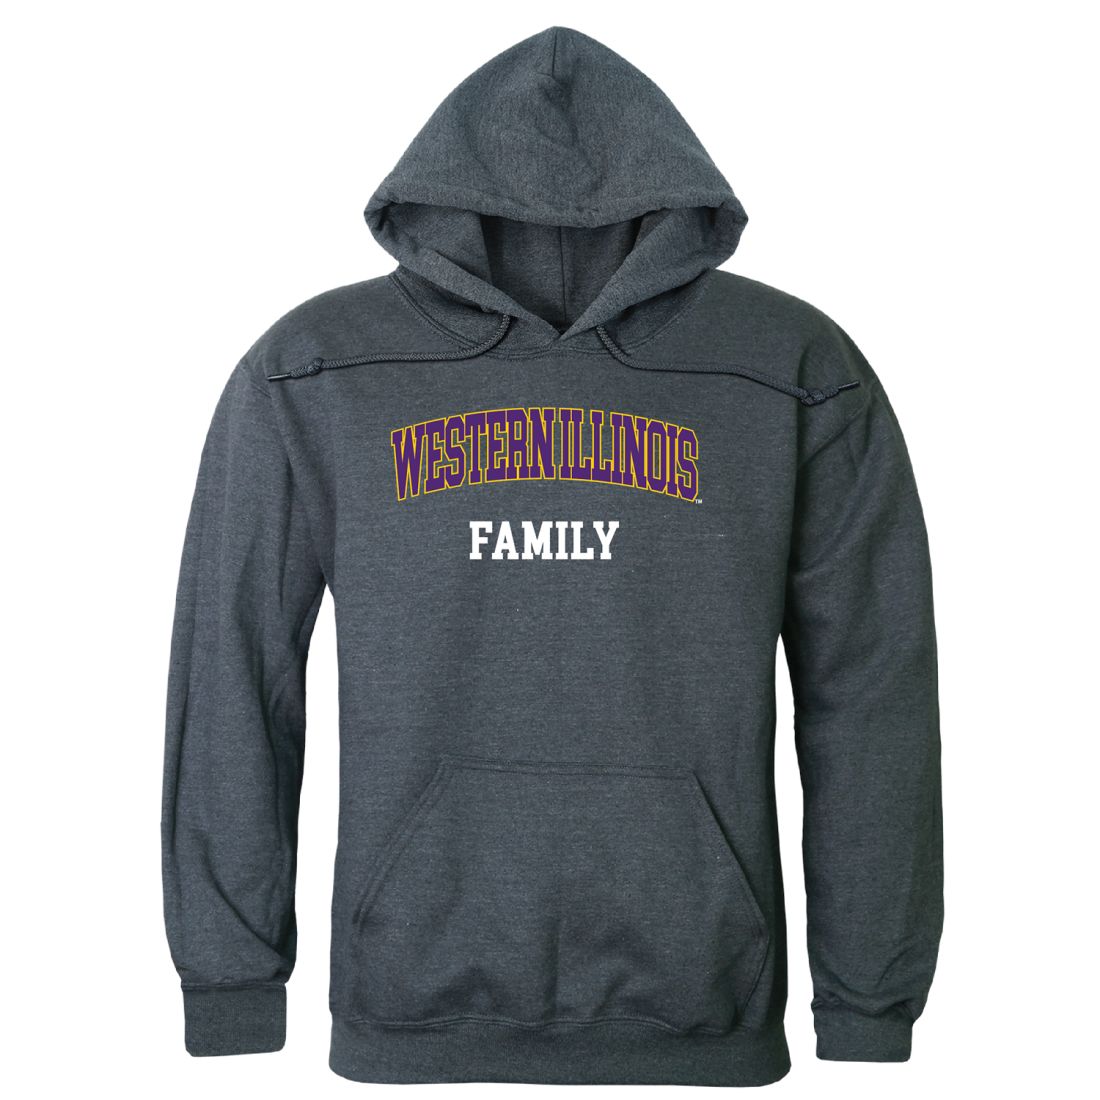 WIU Western Illinois University Leathernecks Family Hoodie Sweatshirts